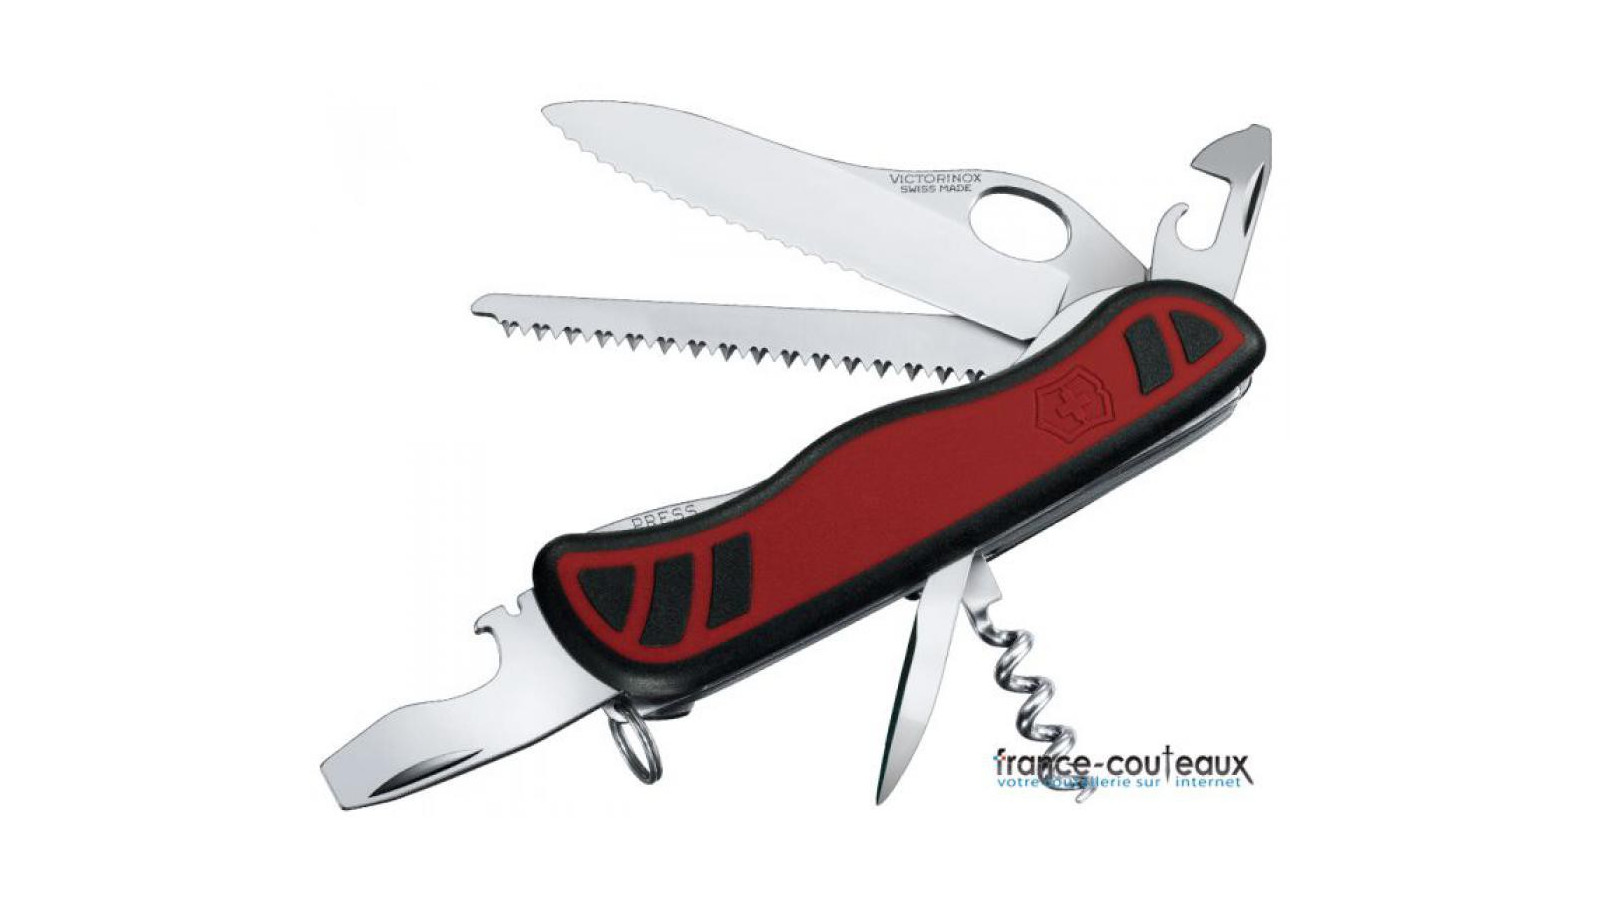 Couteau Suisse Victorinox - Forester One hand rouge et noir